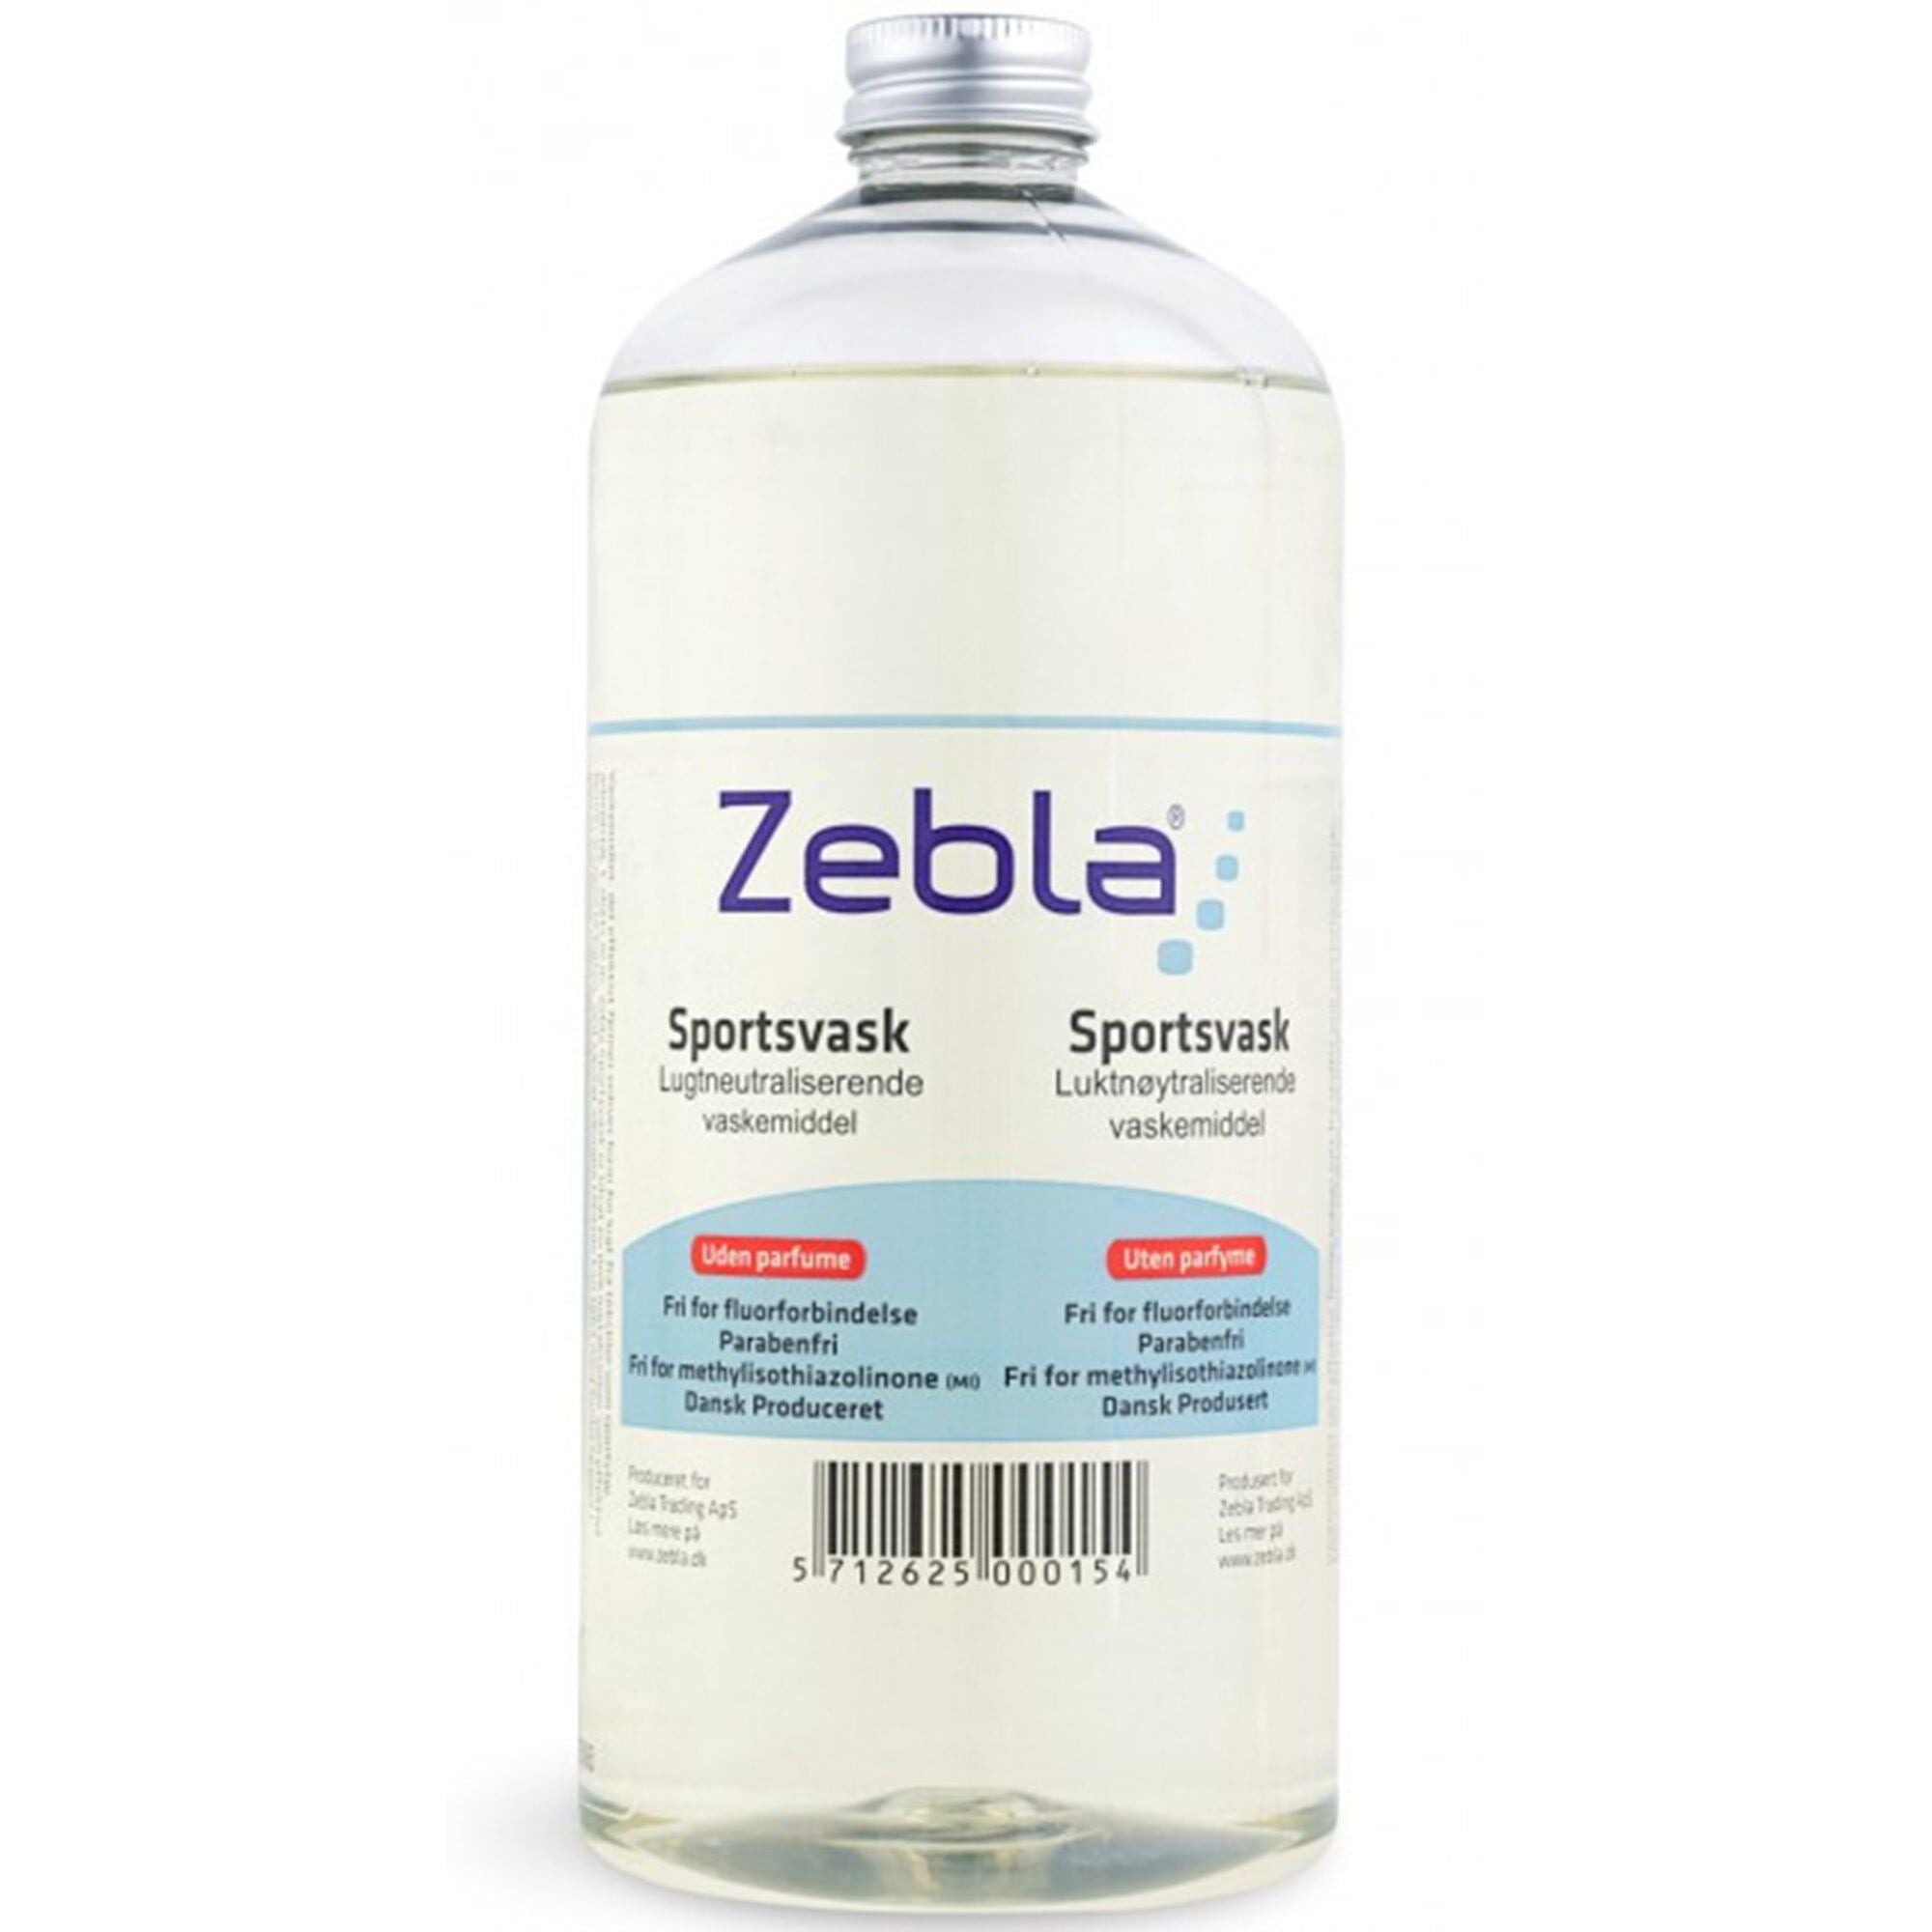 Zebla Lugtneutraliserende Vaskemiddel (0,5 liter)